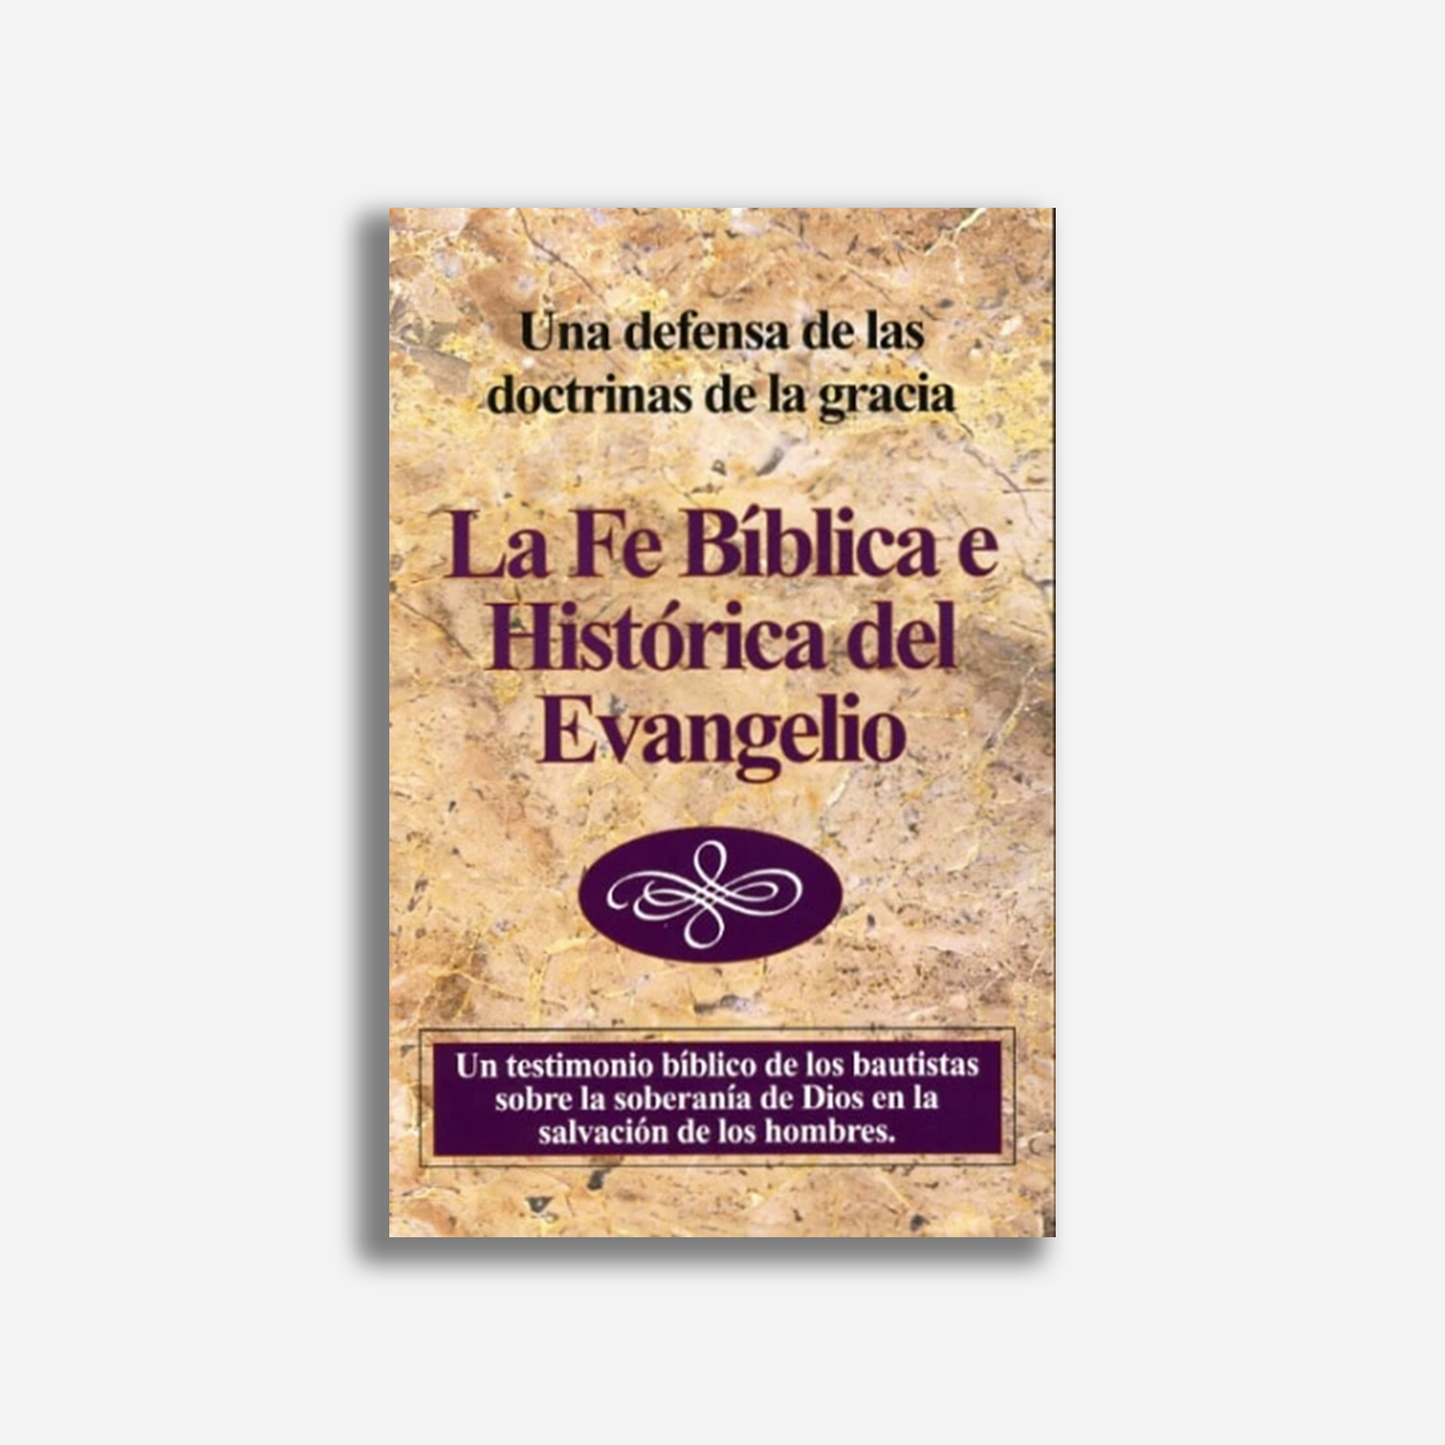 La fe bíblica e histórica del Evangelio